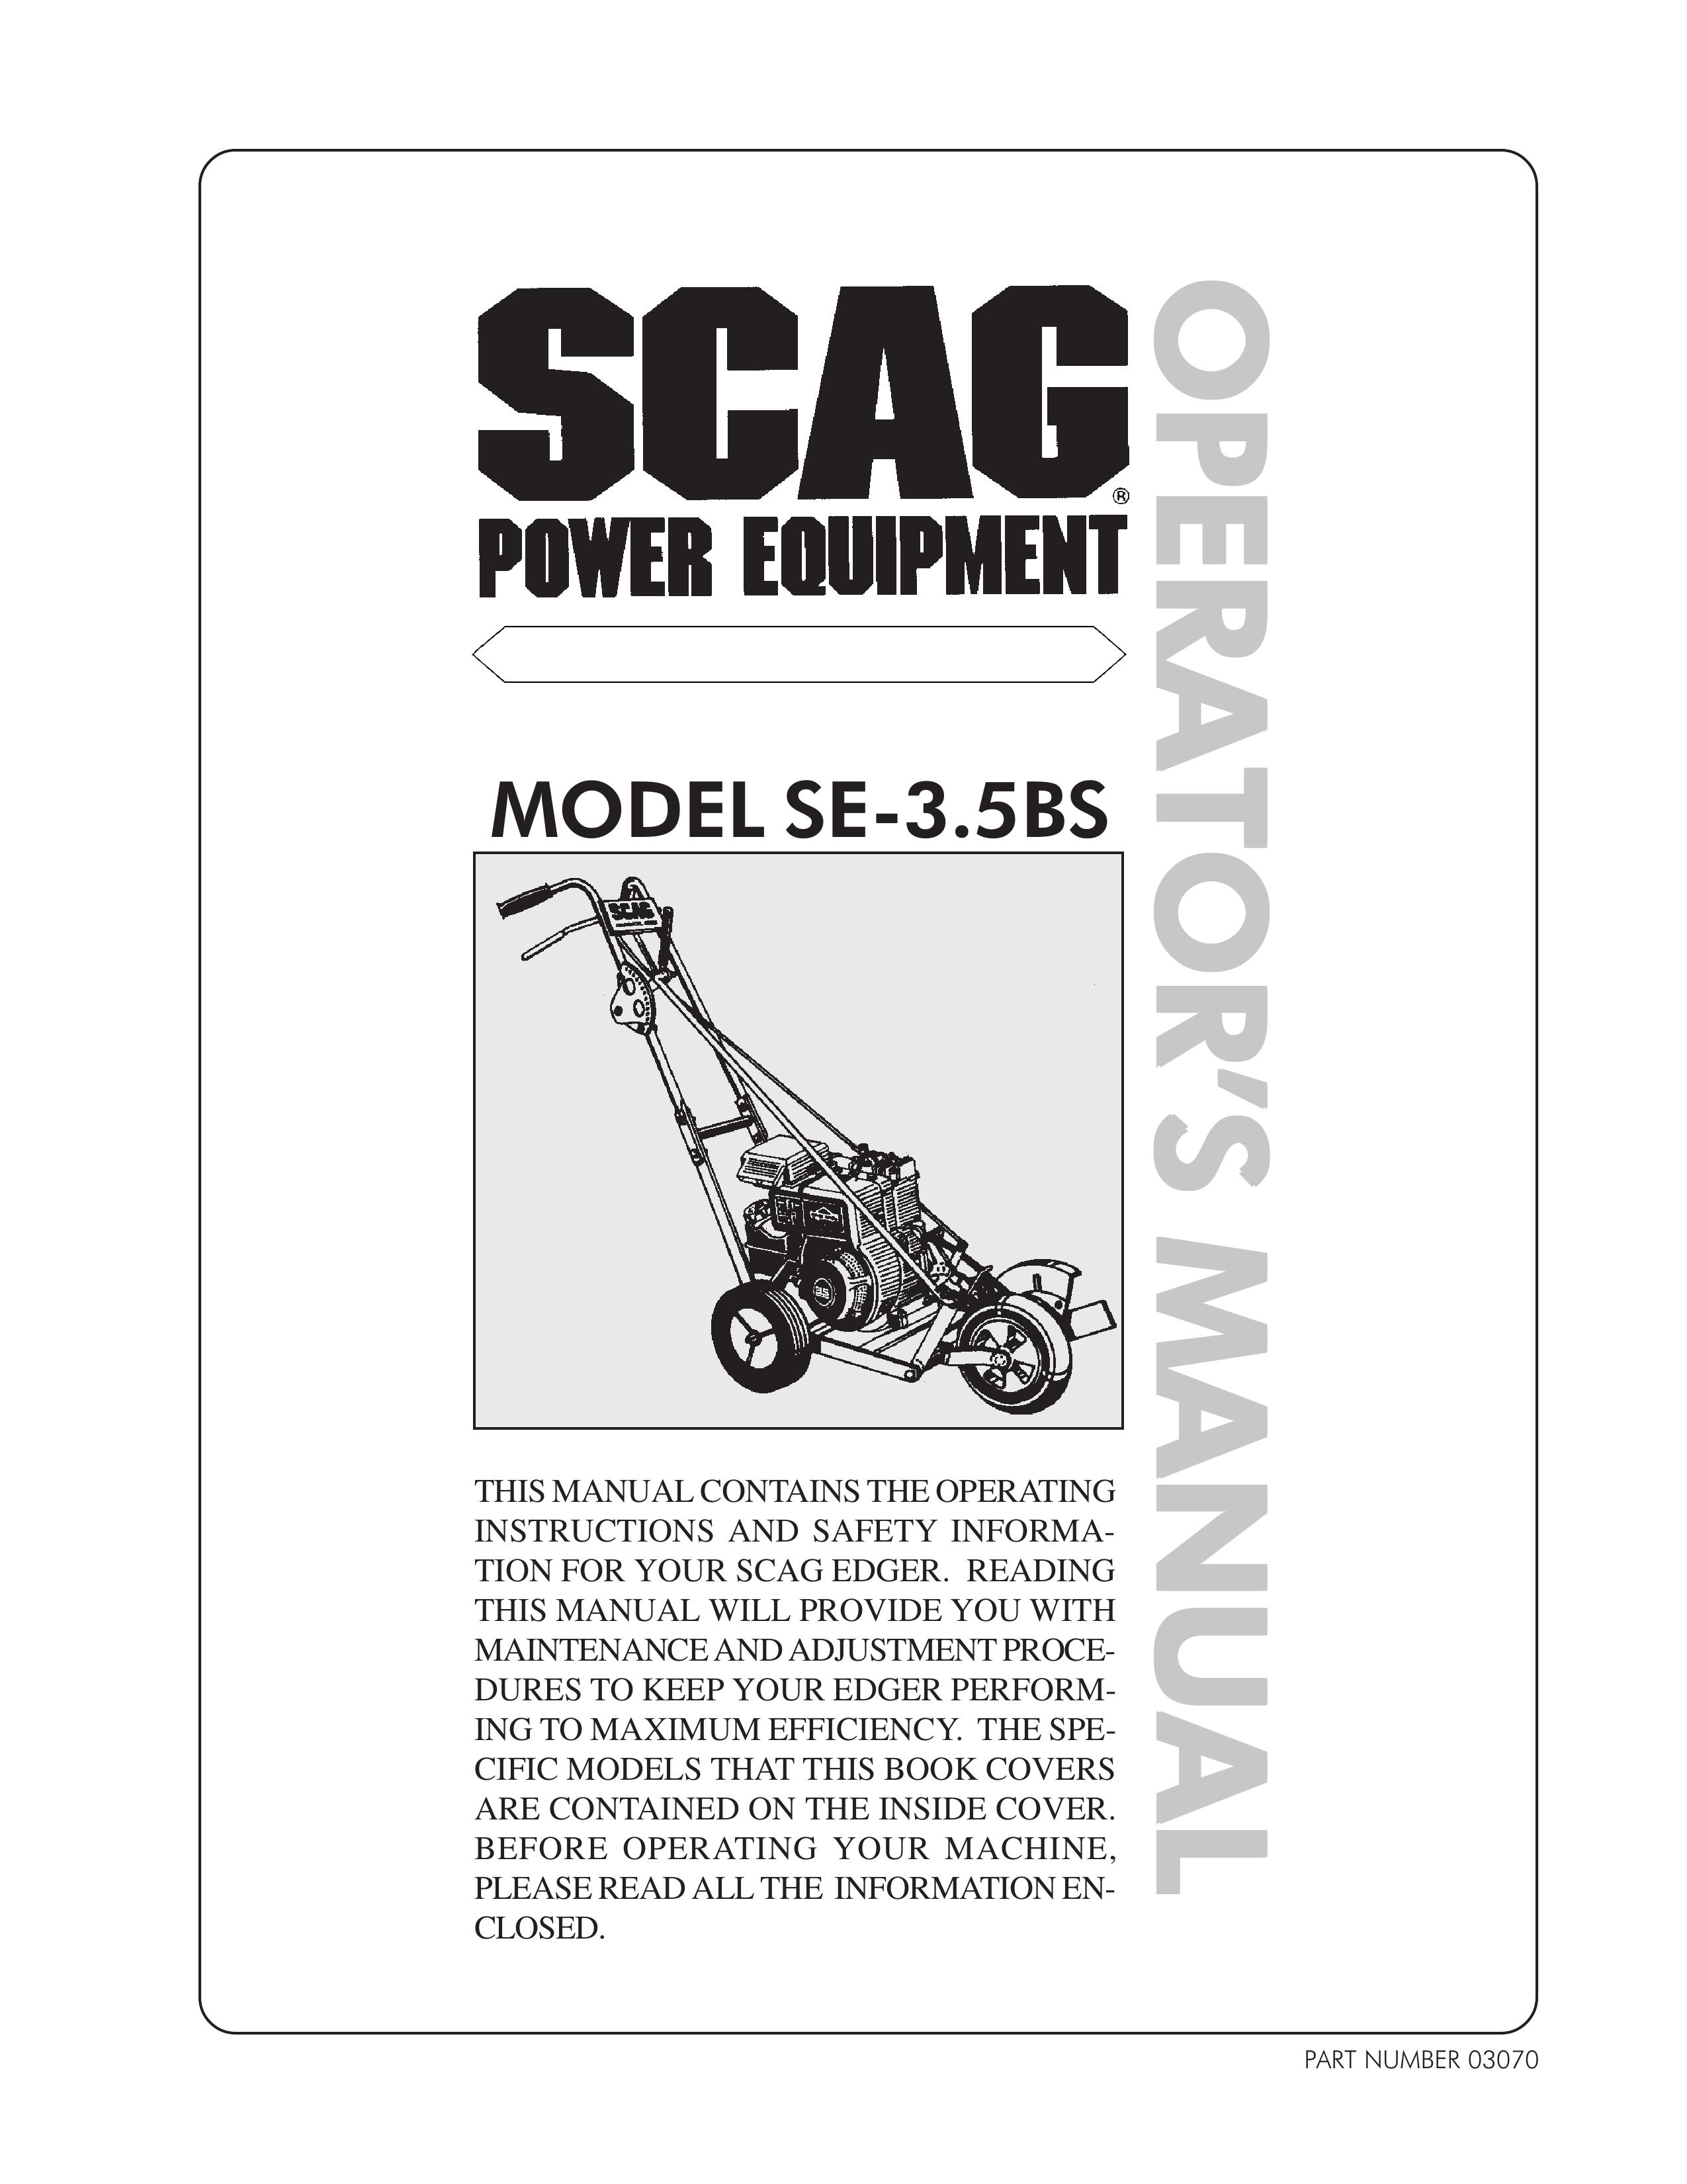 Scag Power Equipment SE-3.5BS Lawn Mower User Manual